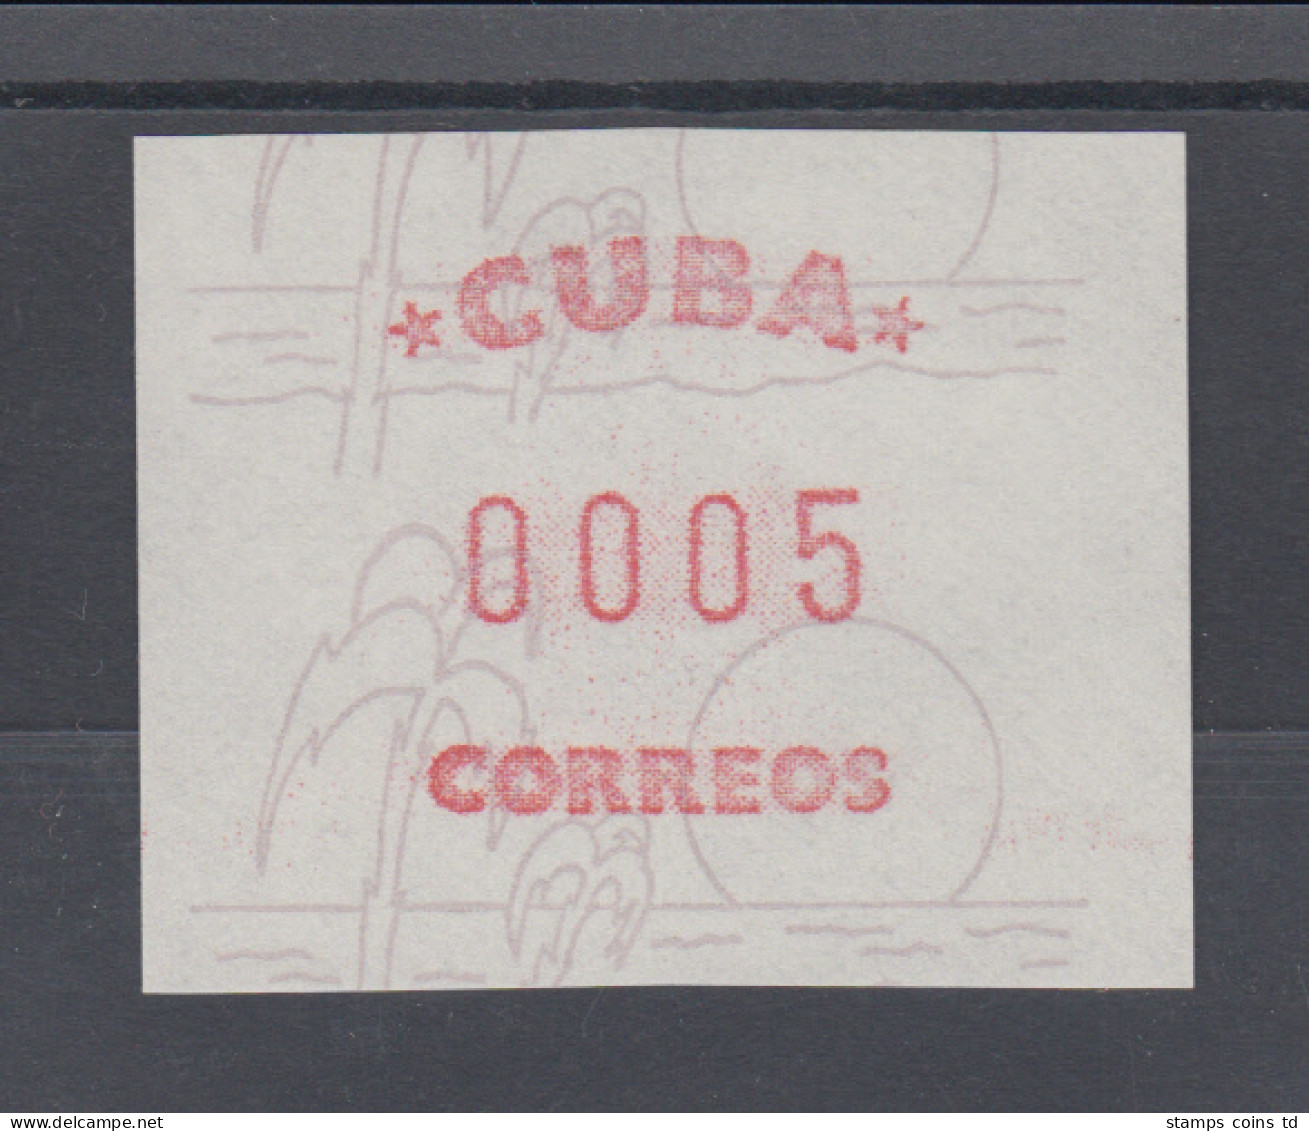 Cuba / Kuba  ATM Freimarke Briefmarkenbörse Sindelfingen 1984, Mi.-Nr. 3 ** - Viñetas De Franqueo (Frama)